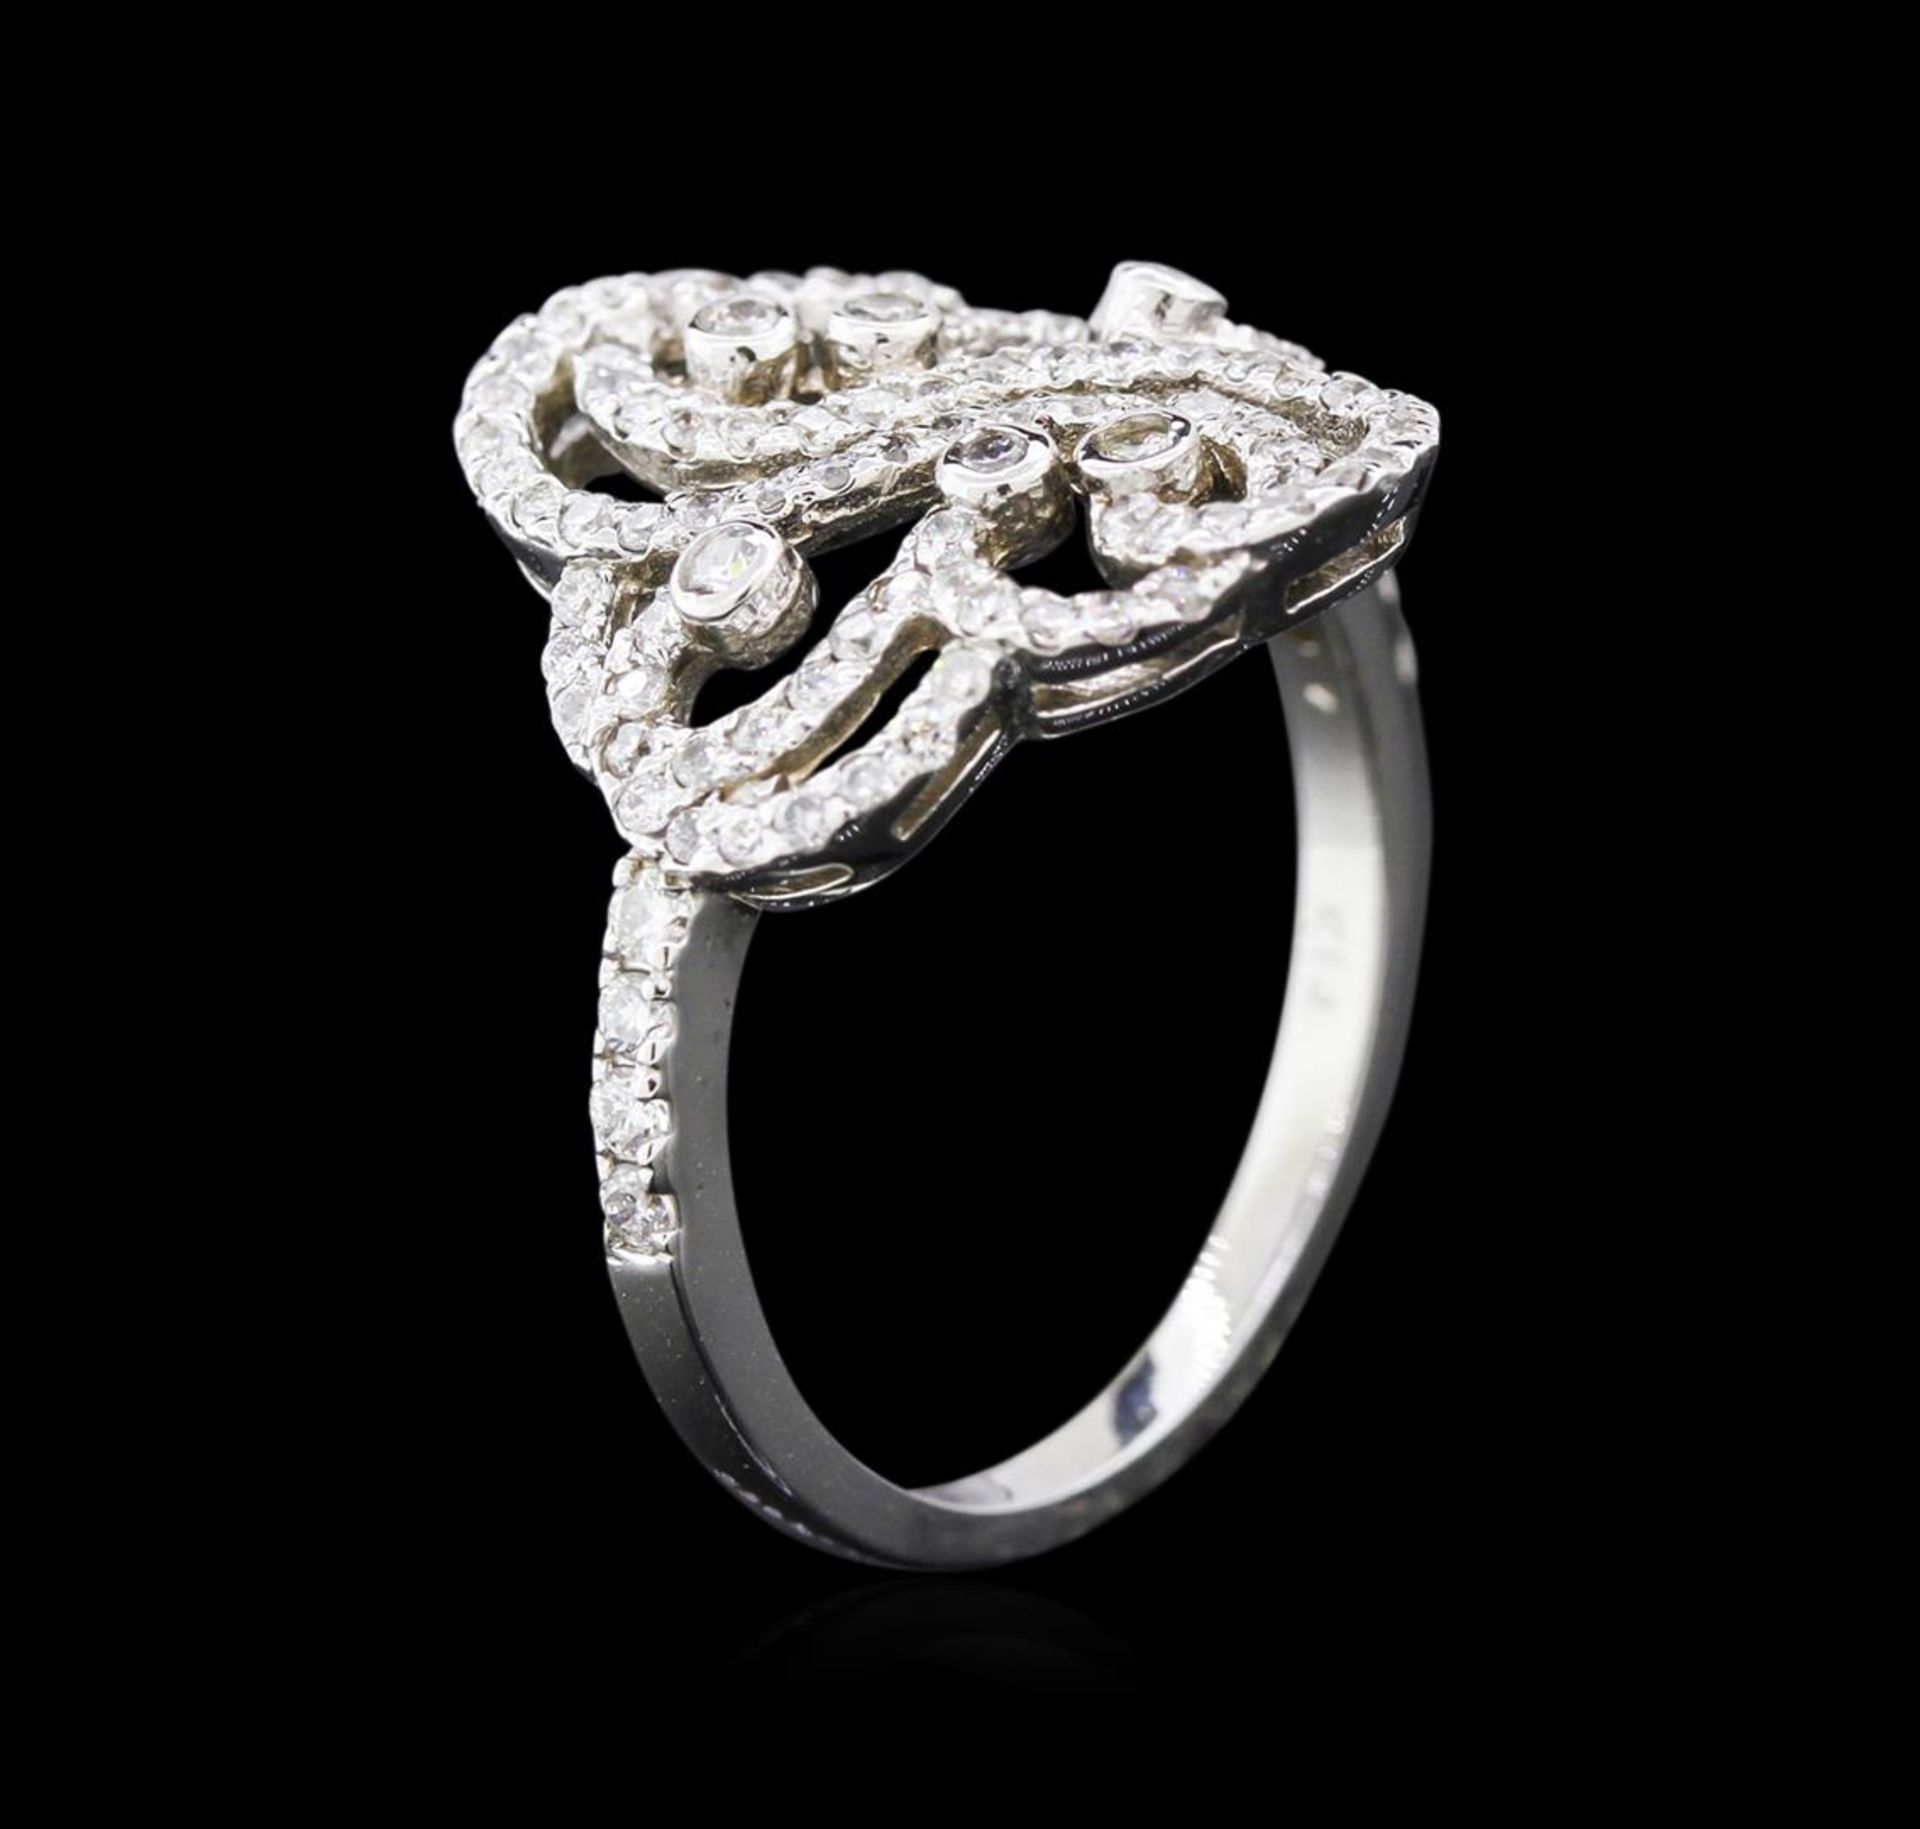 0.50 ctw Diamond Ring - 14KT White Gold - Image 3 of 3